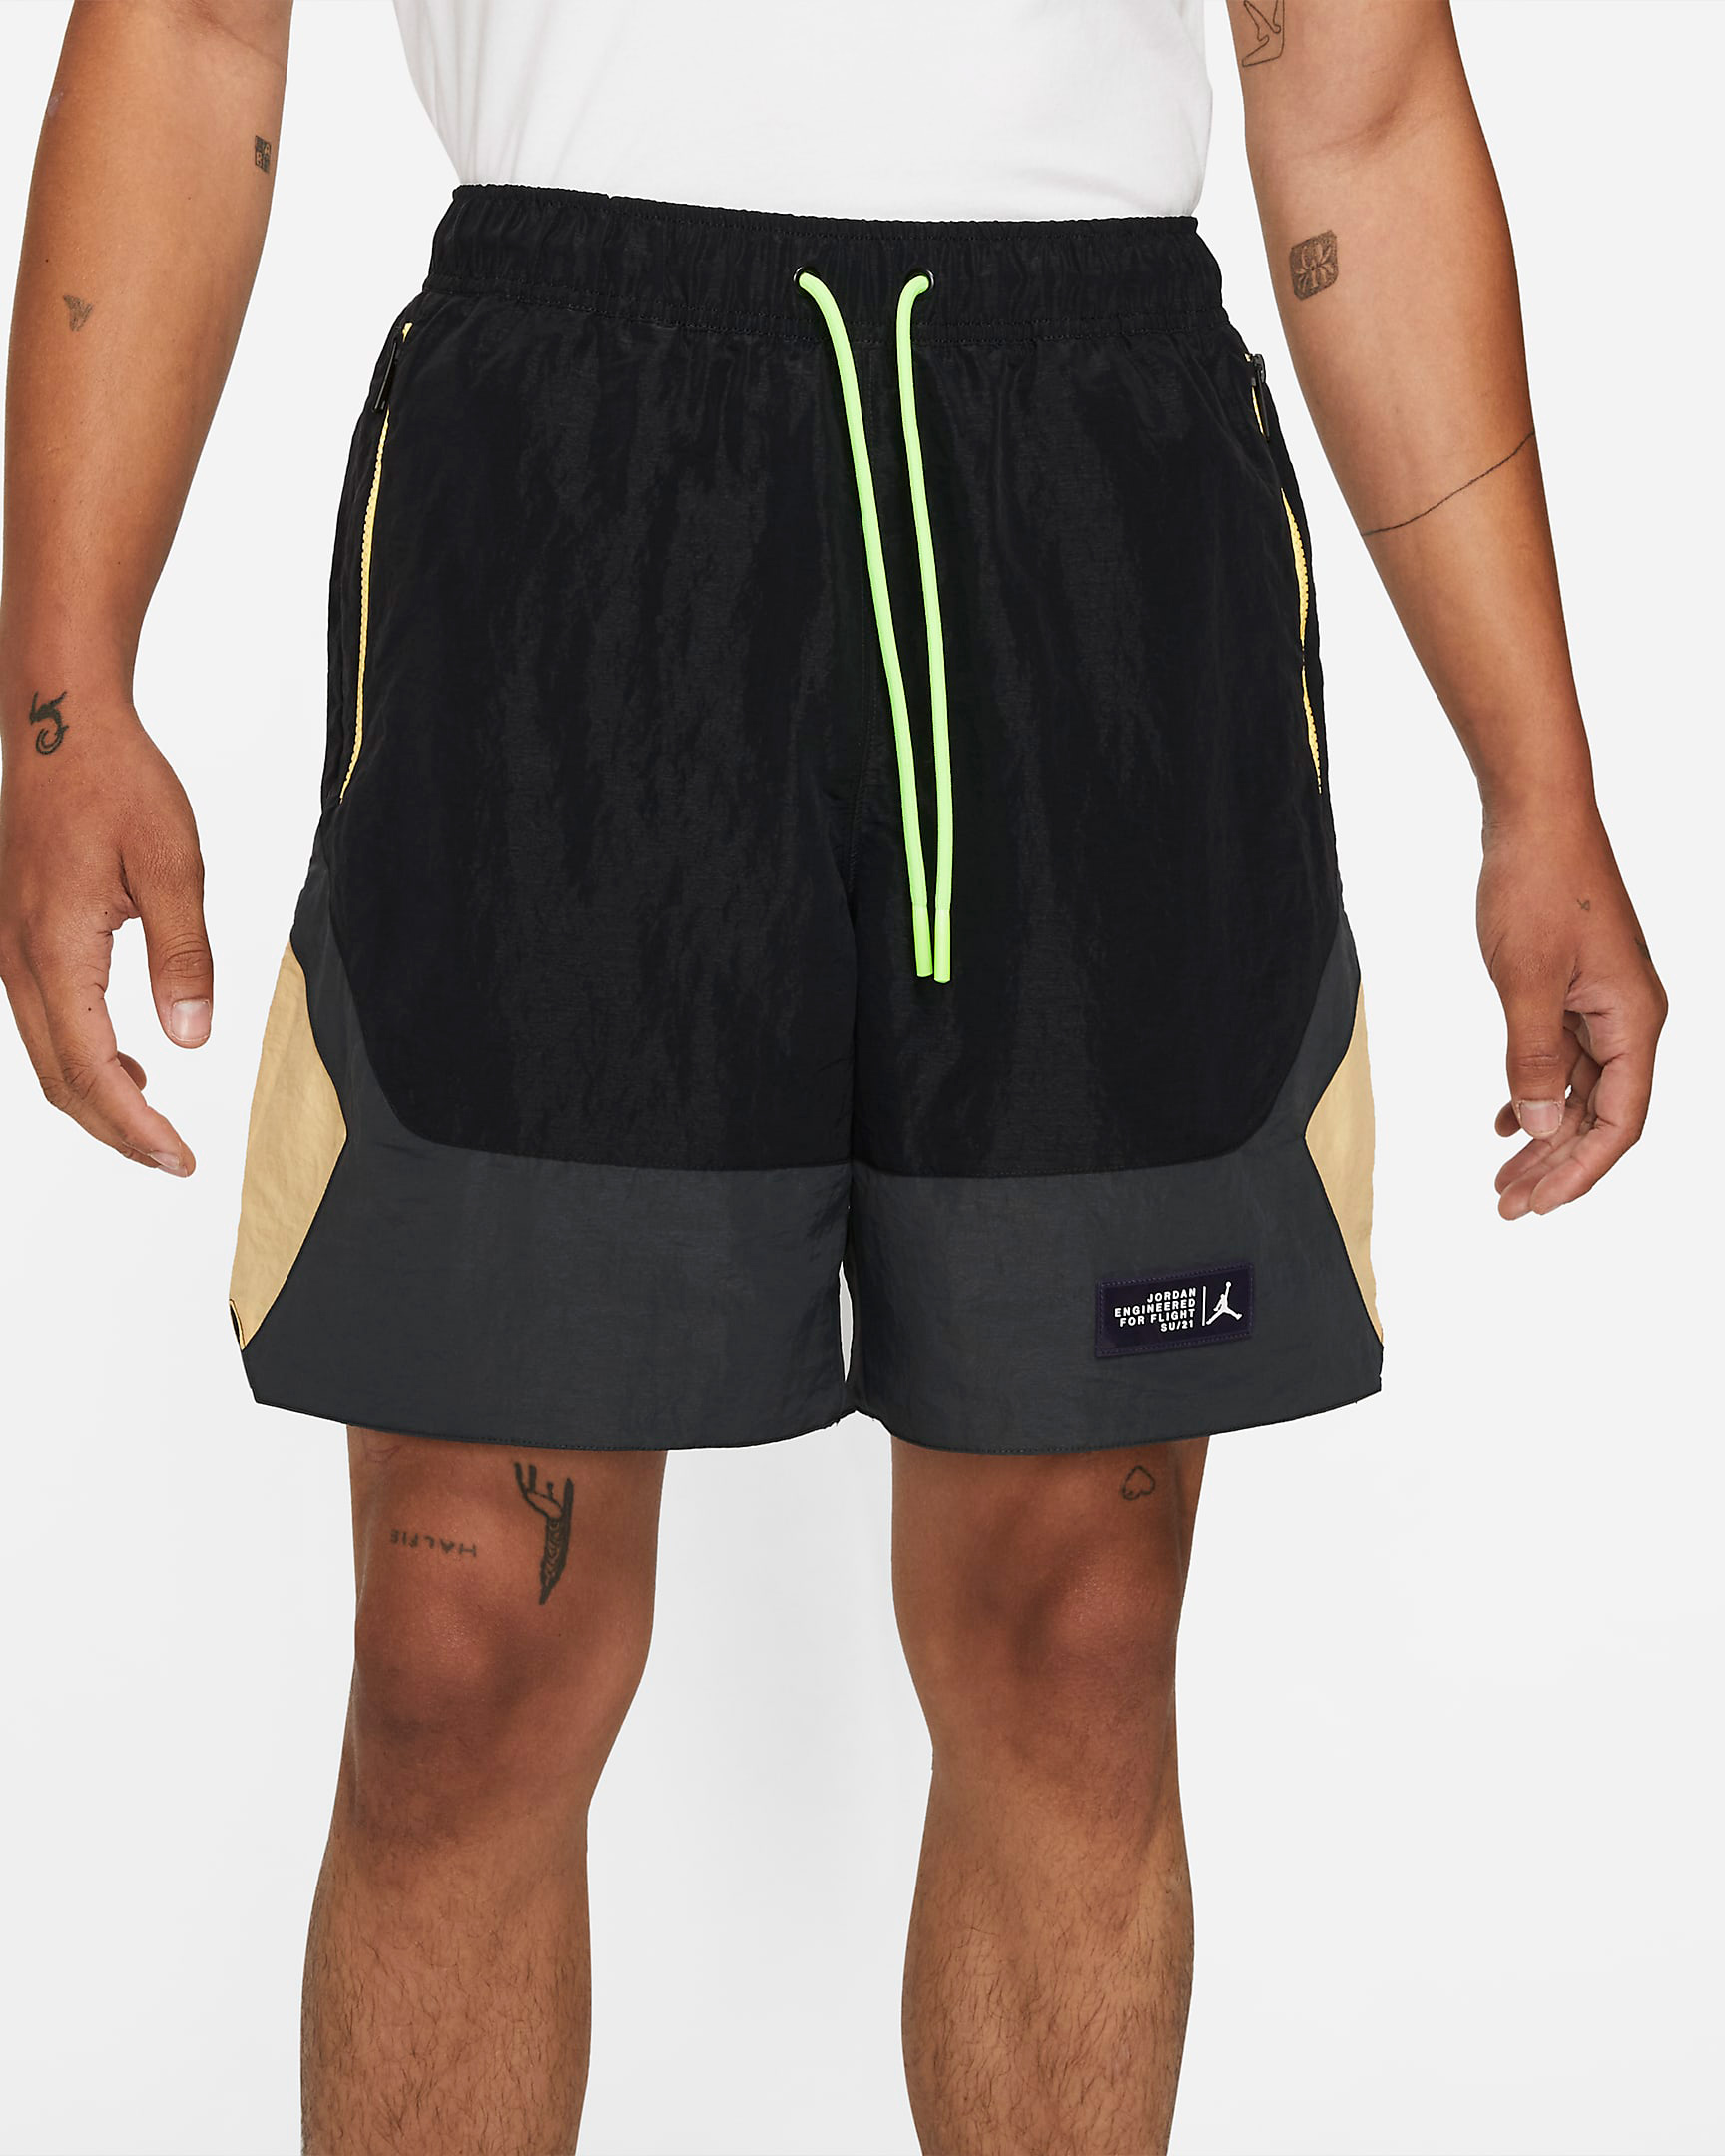 jordan-23-engineered-shorts-black-electric-green